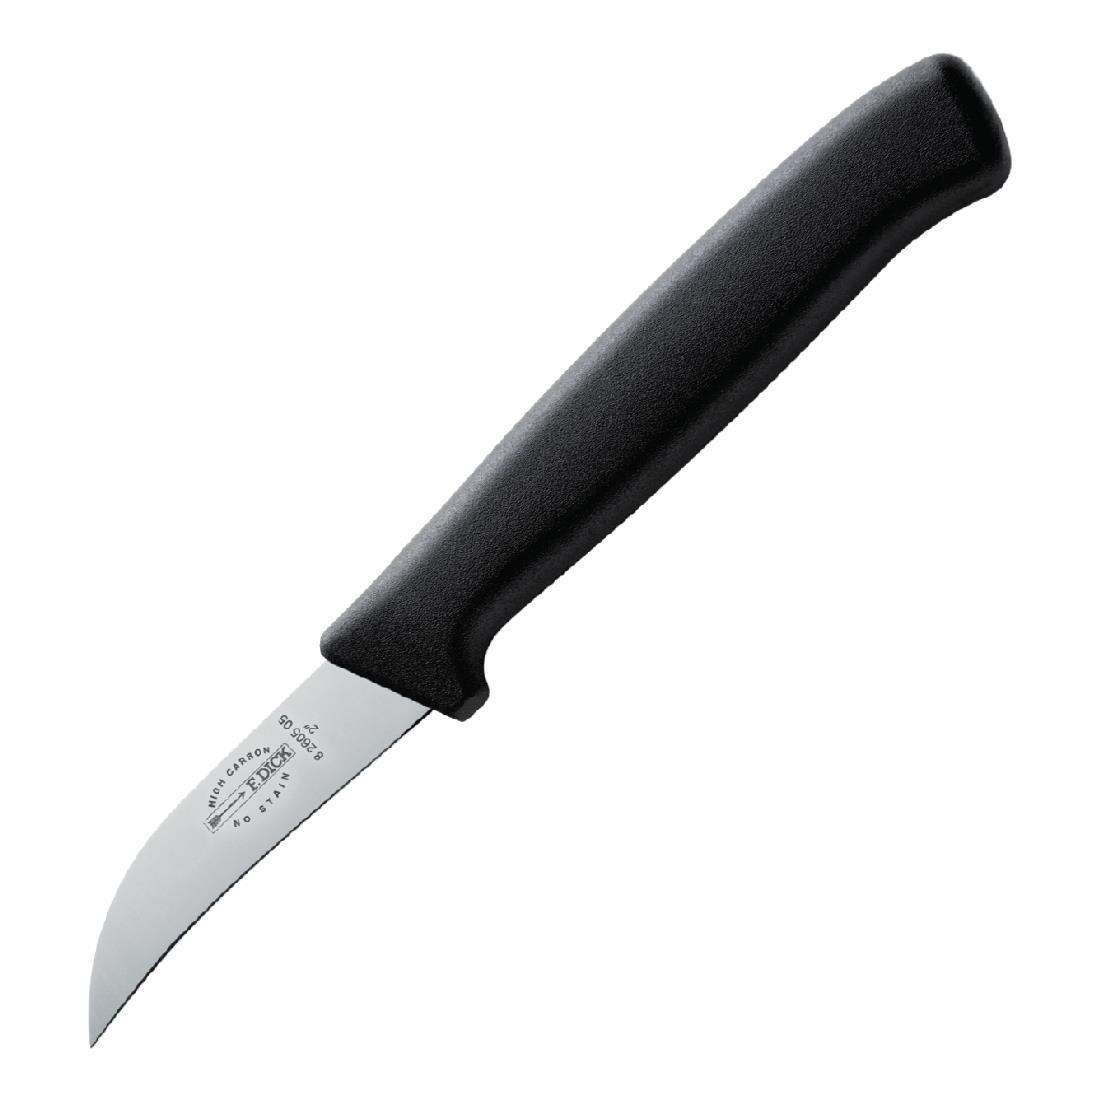 Dick Pro Dynamic 8 Piece Starter Knife Set With Roll Bag - DL385  - 7